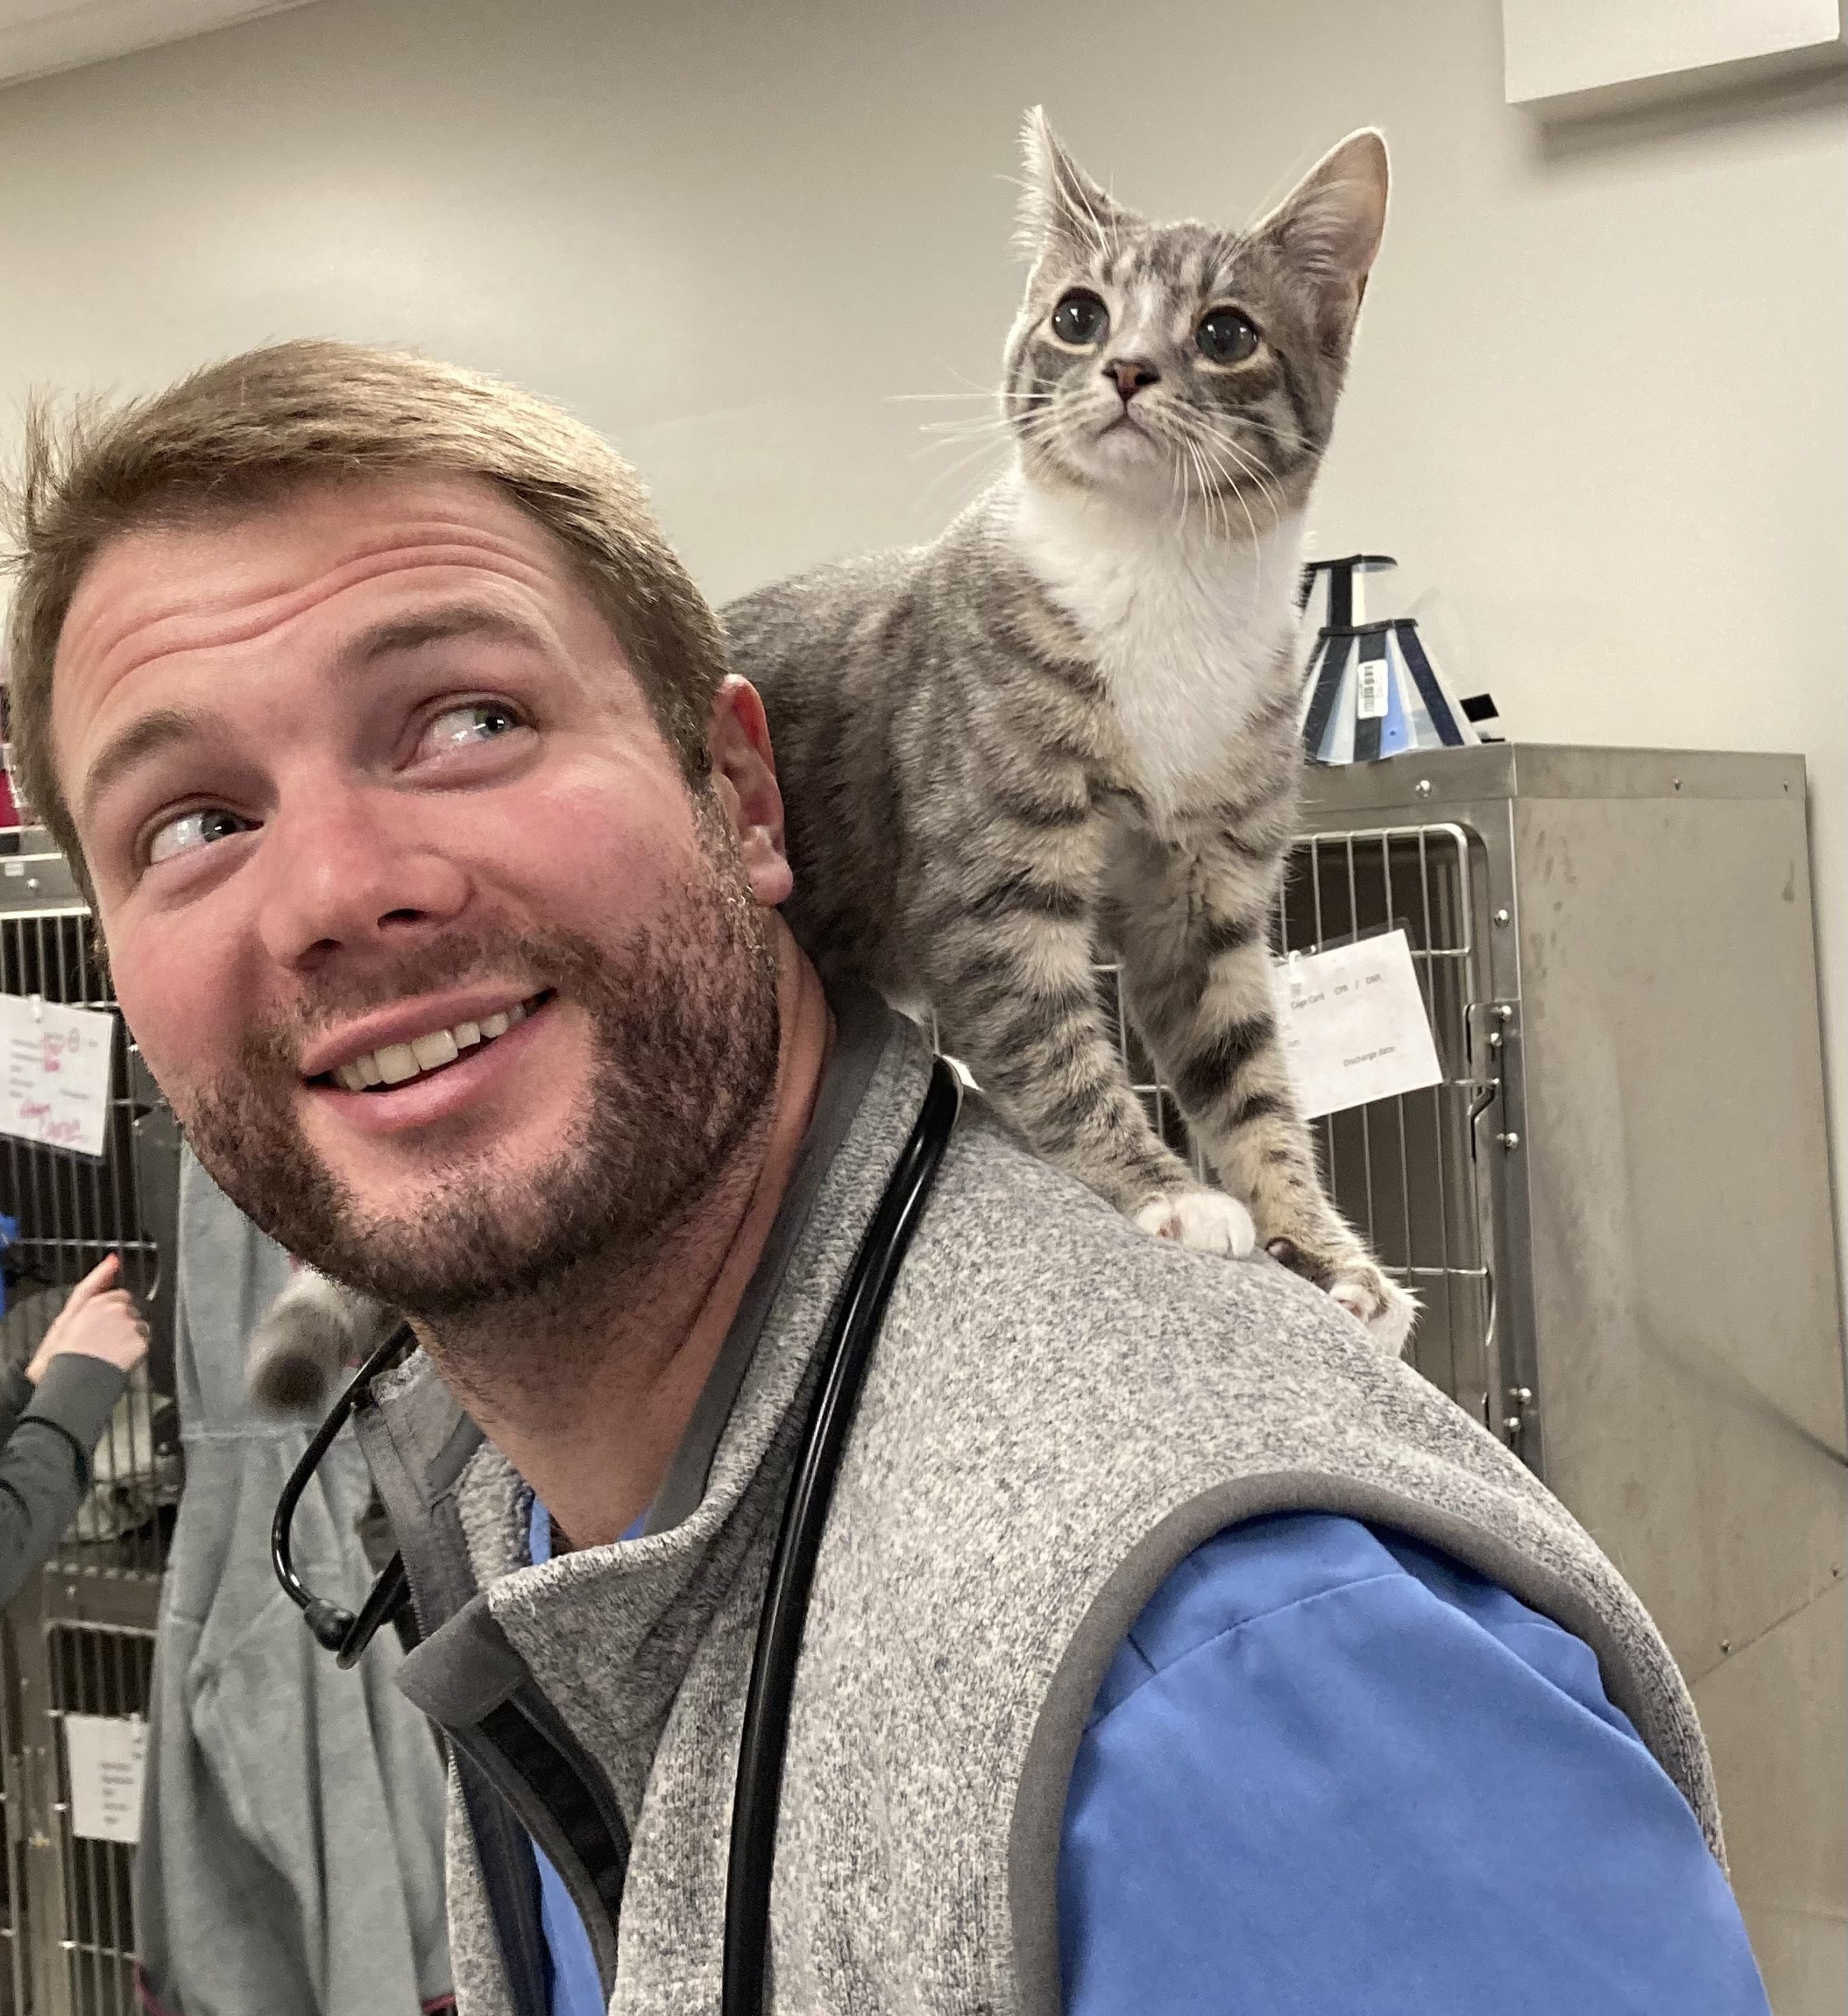 Dr. Clendinen at Huntsville Veterinary Animal Hospital with a kitten on his shoulder